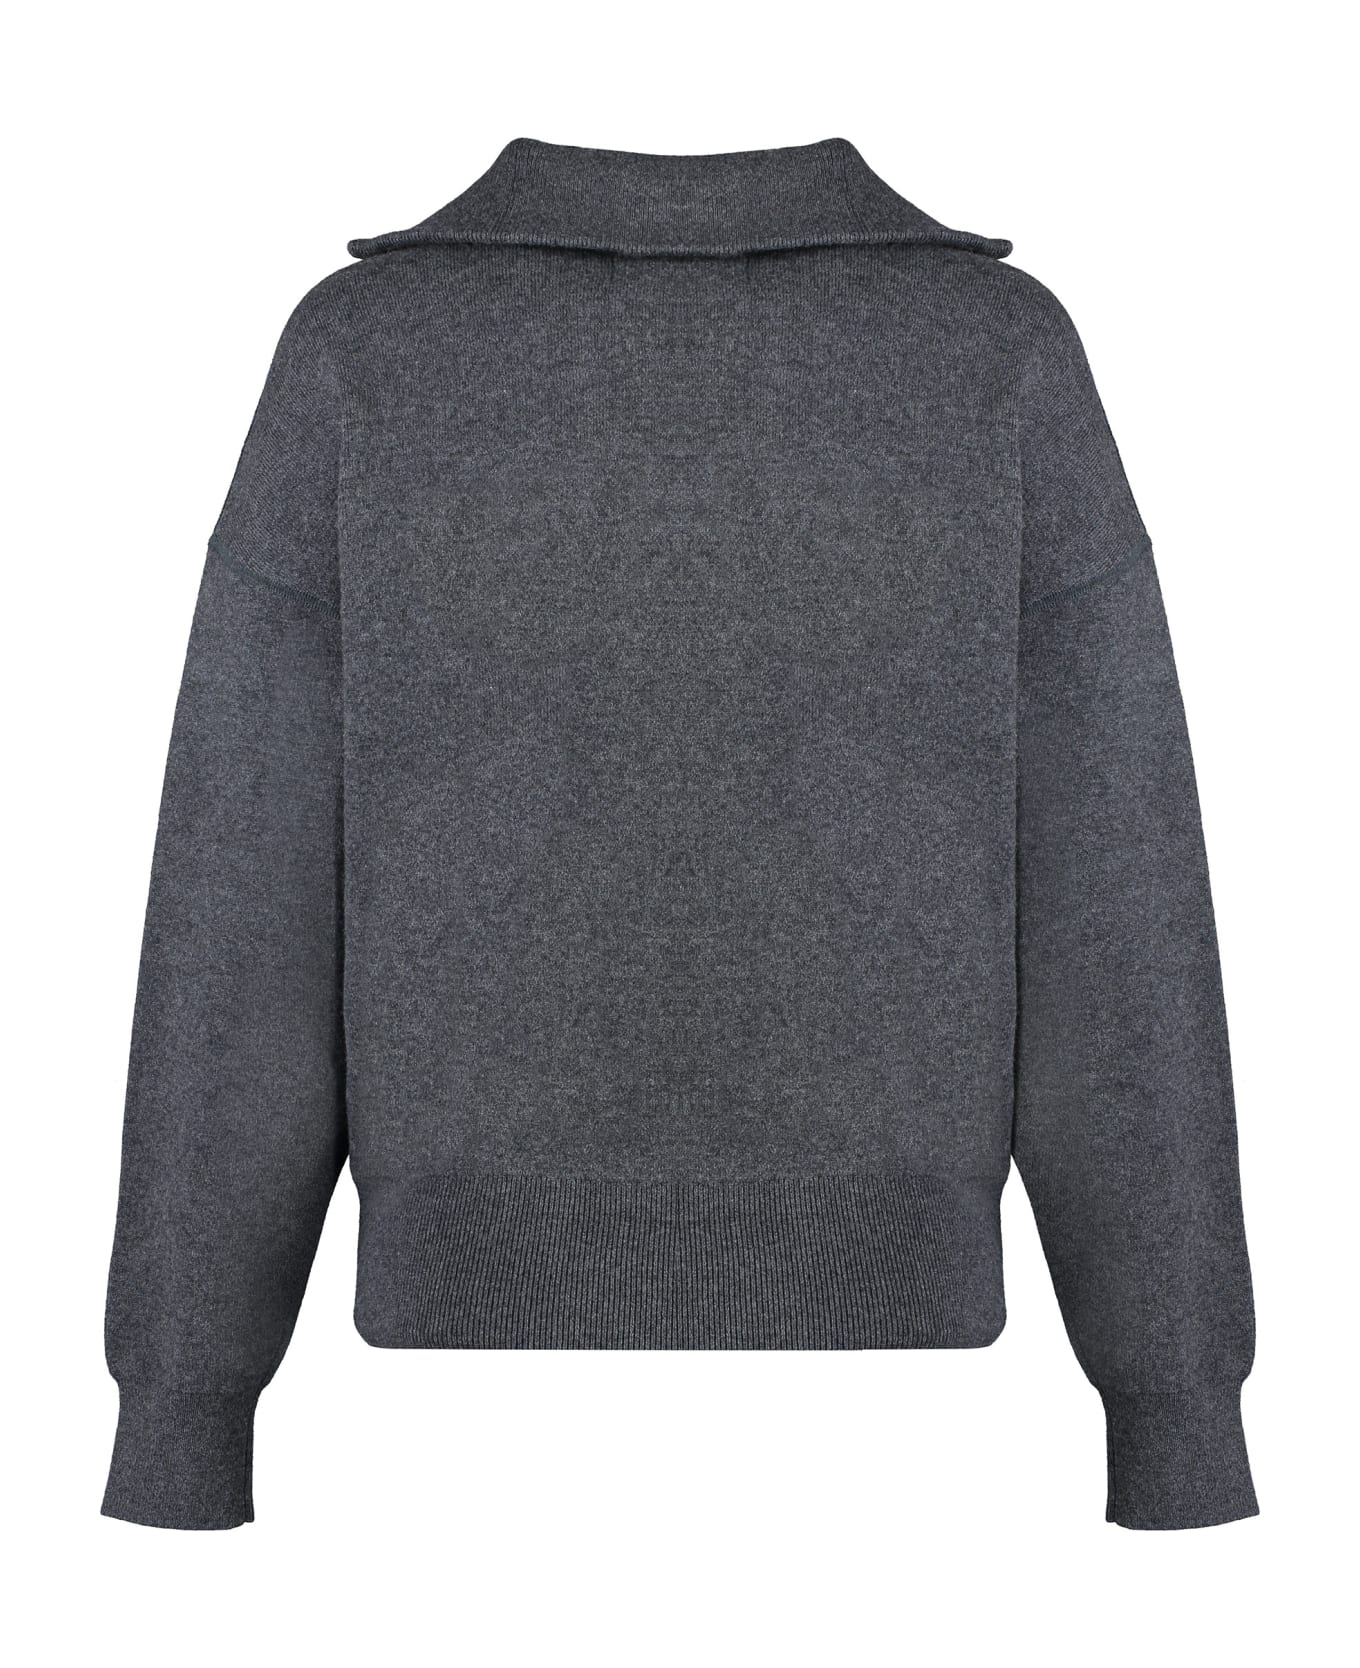 Marant Étoile Azra Wool Turtleneck Sweater - grey